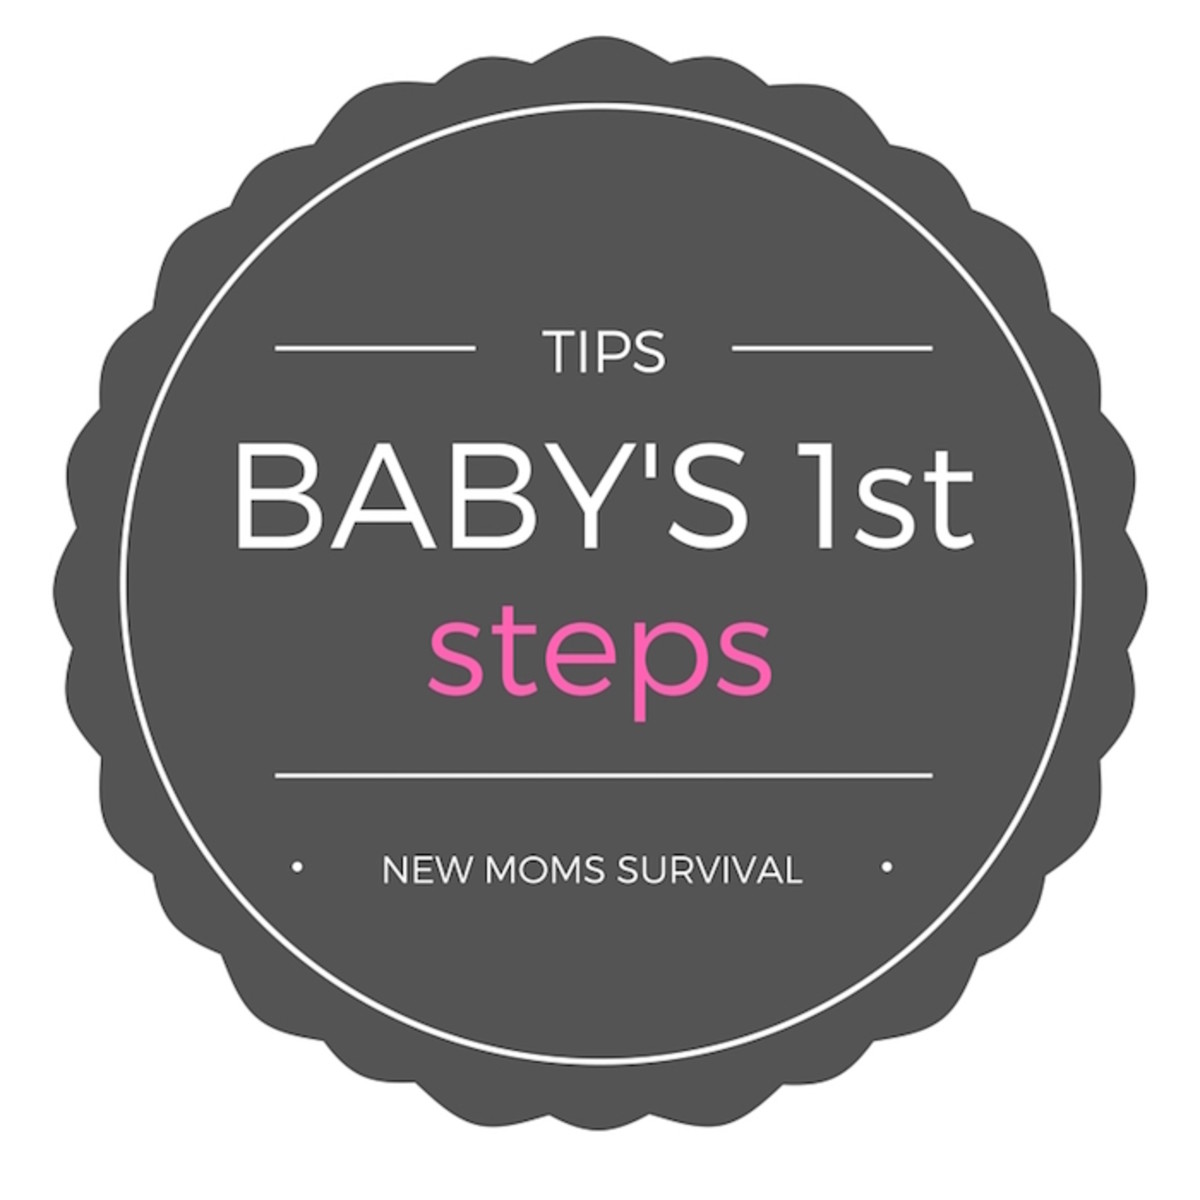 baby steps